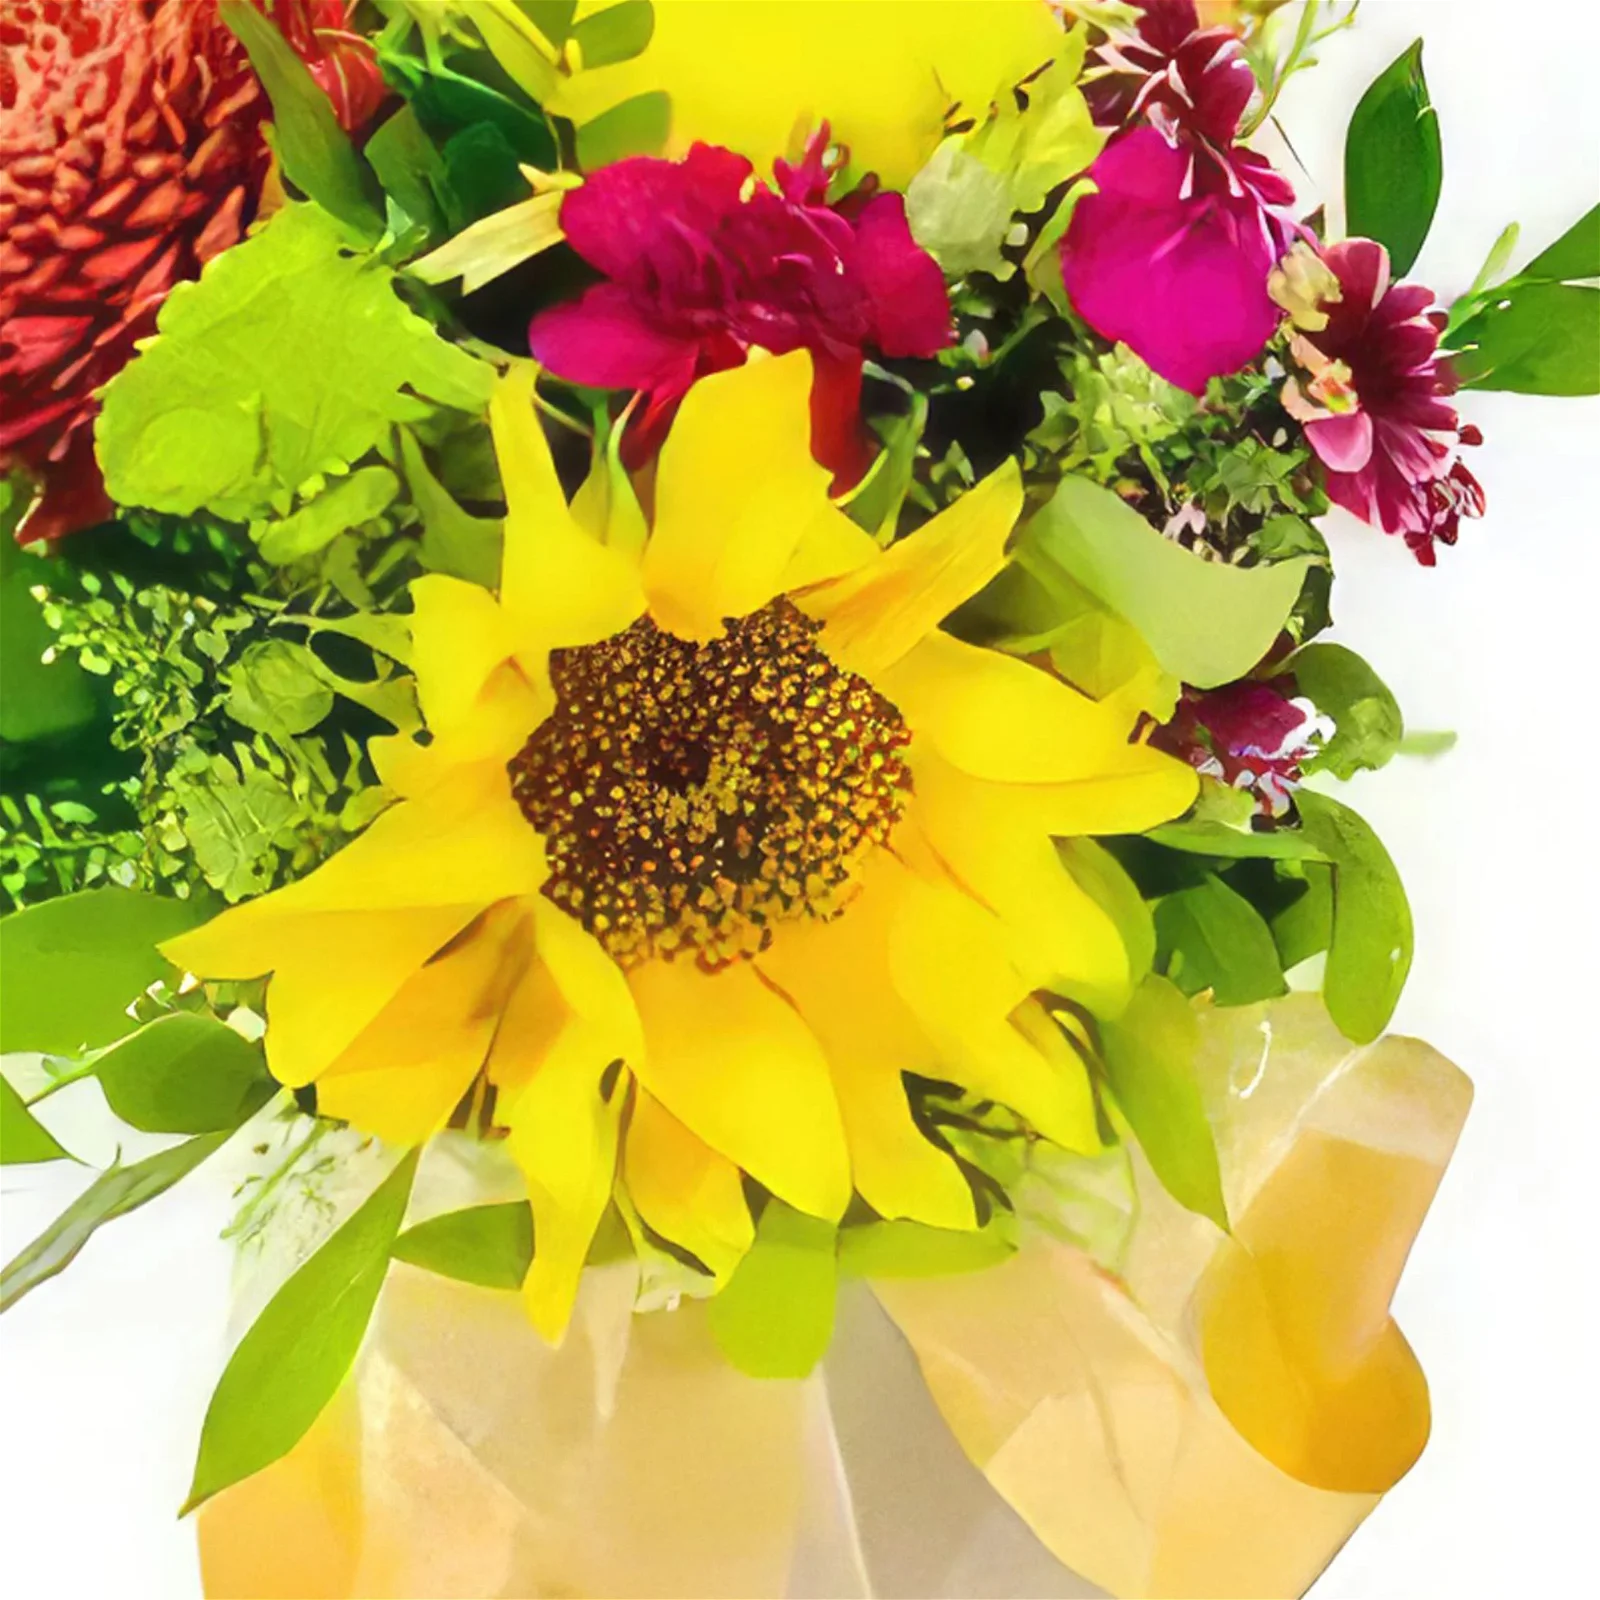 Gregorio Arlee Manalich λουλούδια- Ανοιξιάτικη αγάπη Μπουκέτο/ρύθμιση λουλουδιών